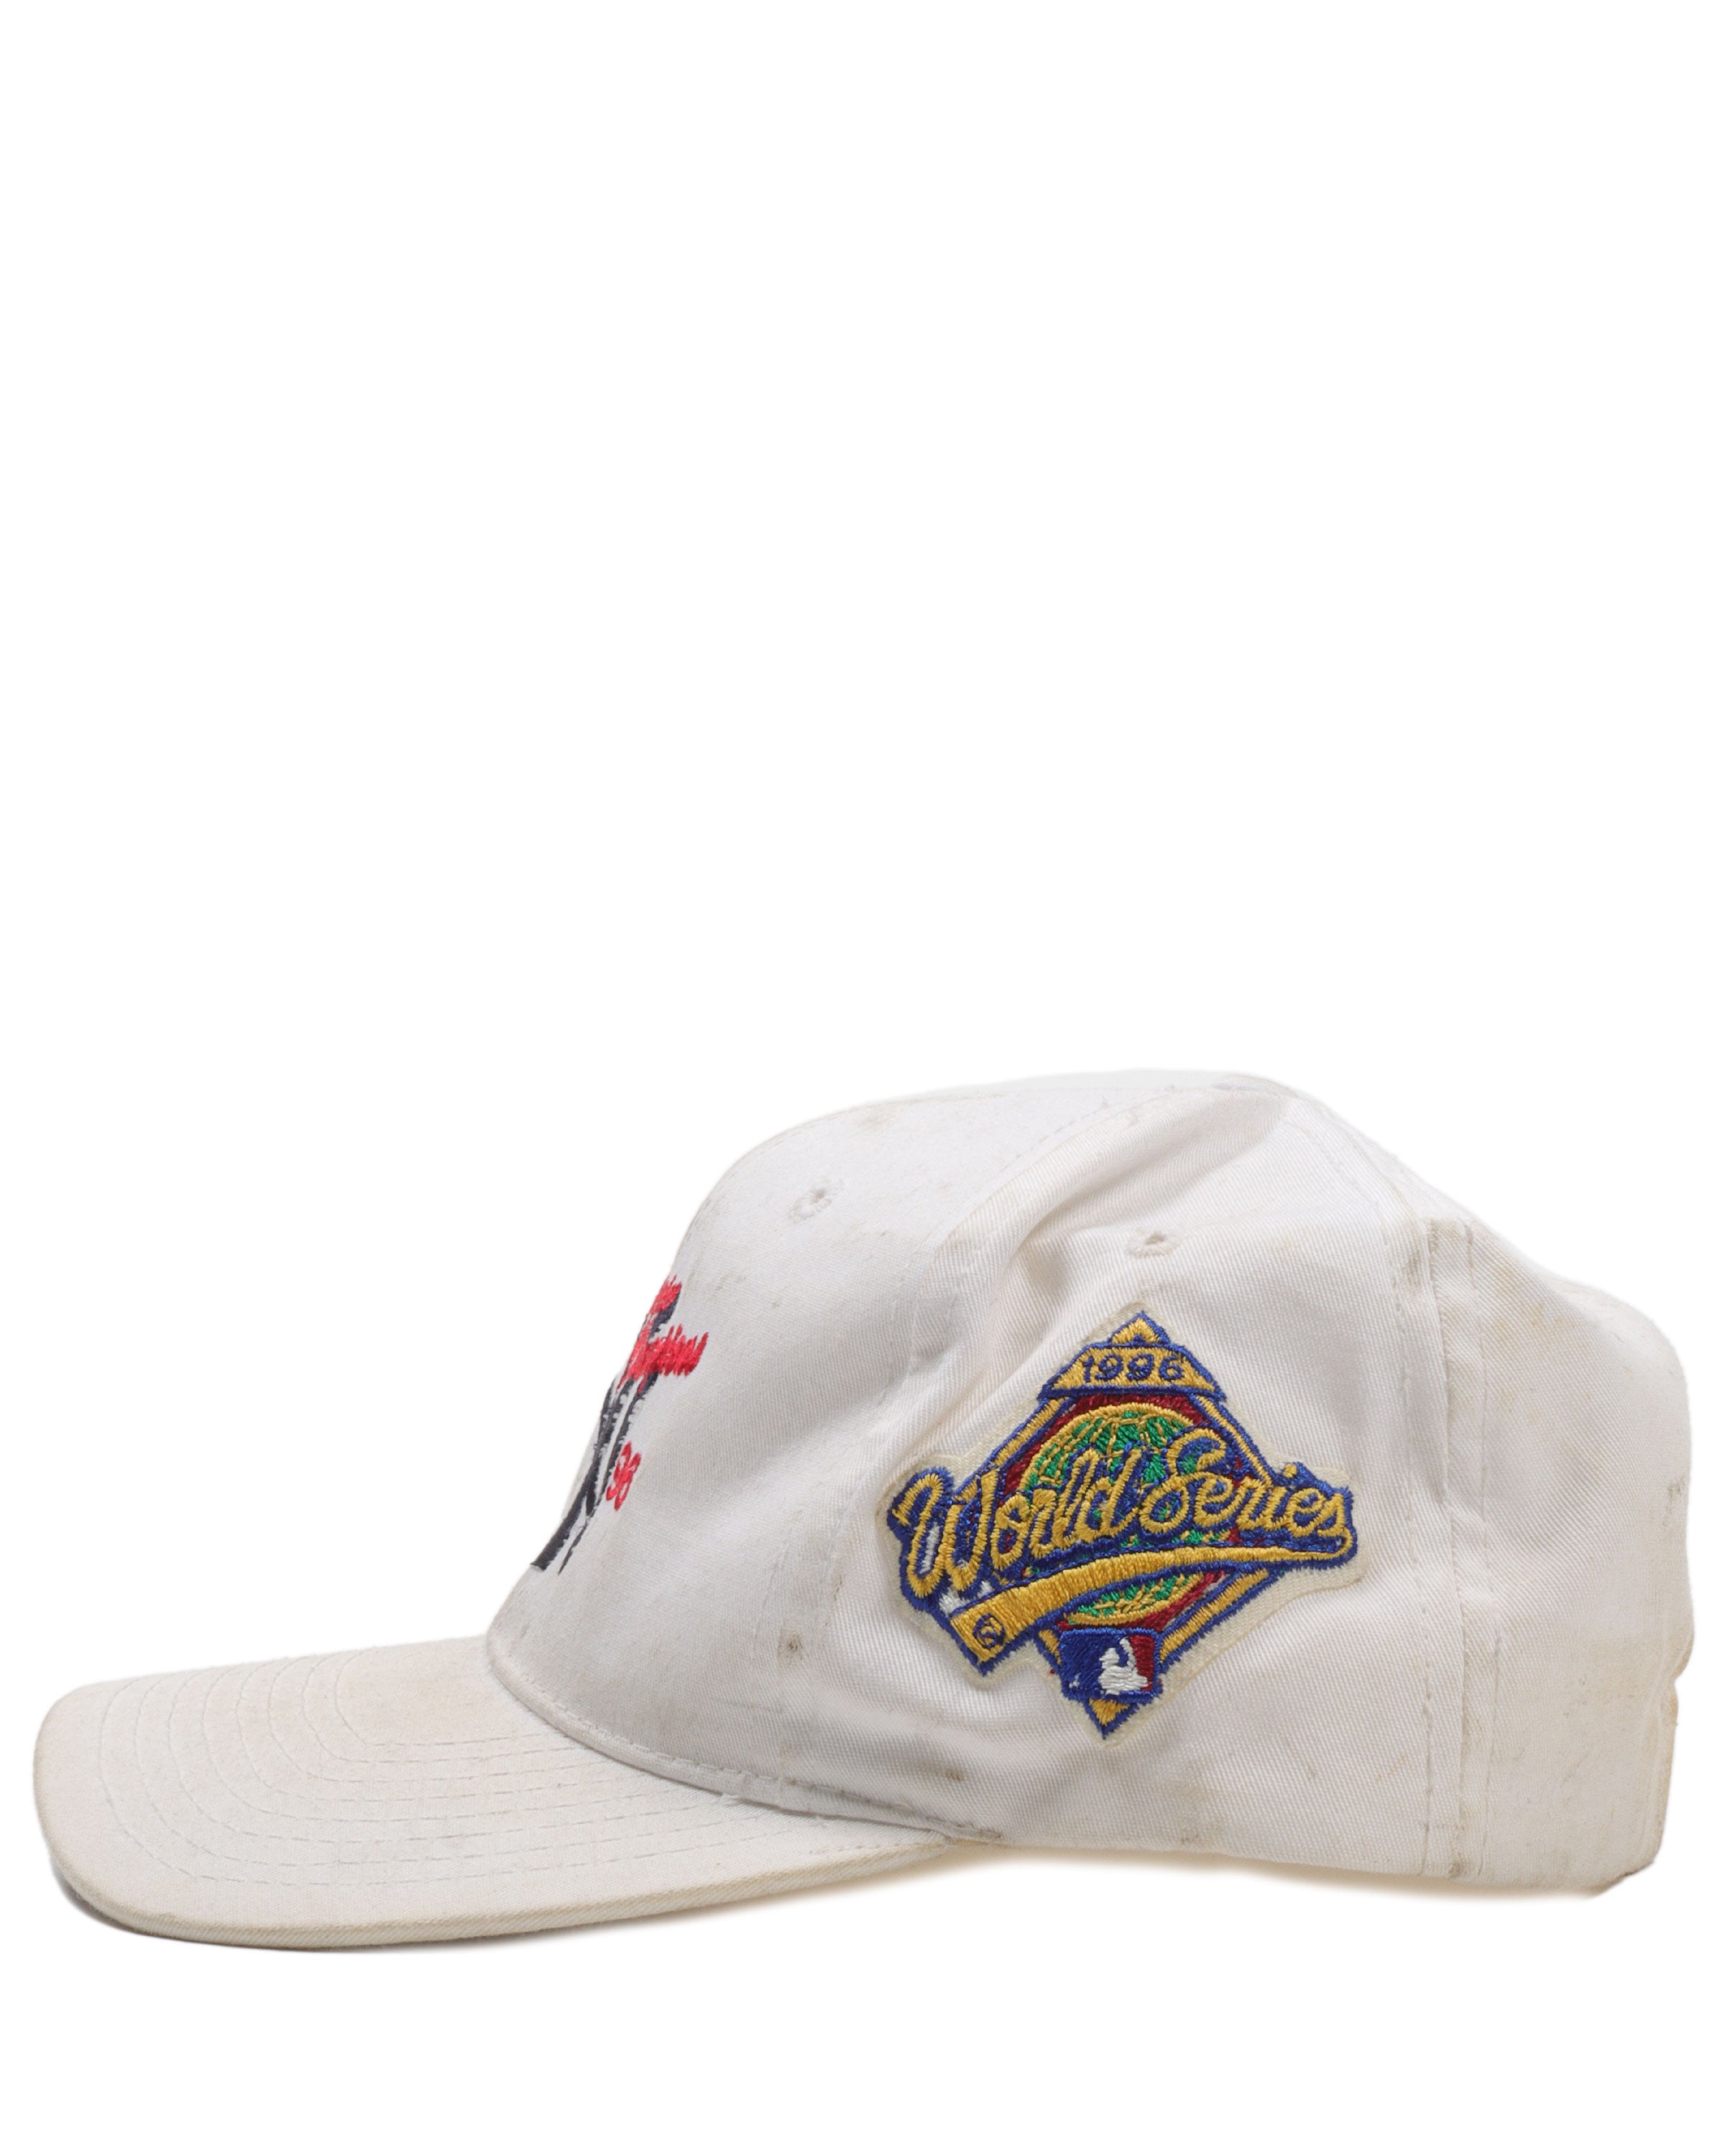 New York Yankees 1996 World Series Hat